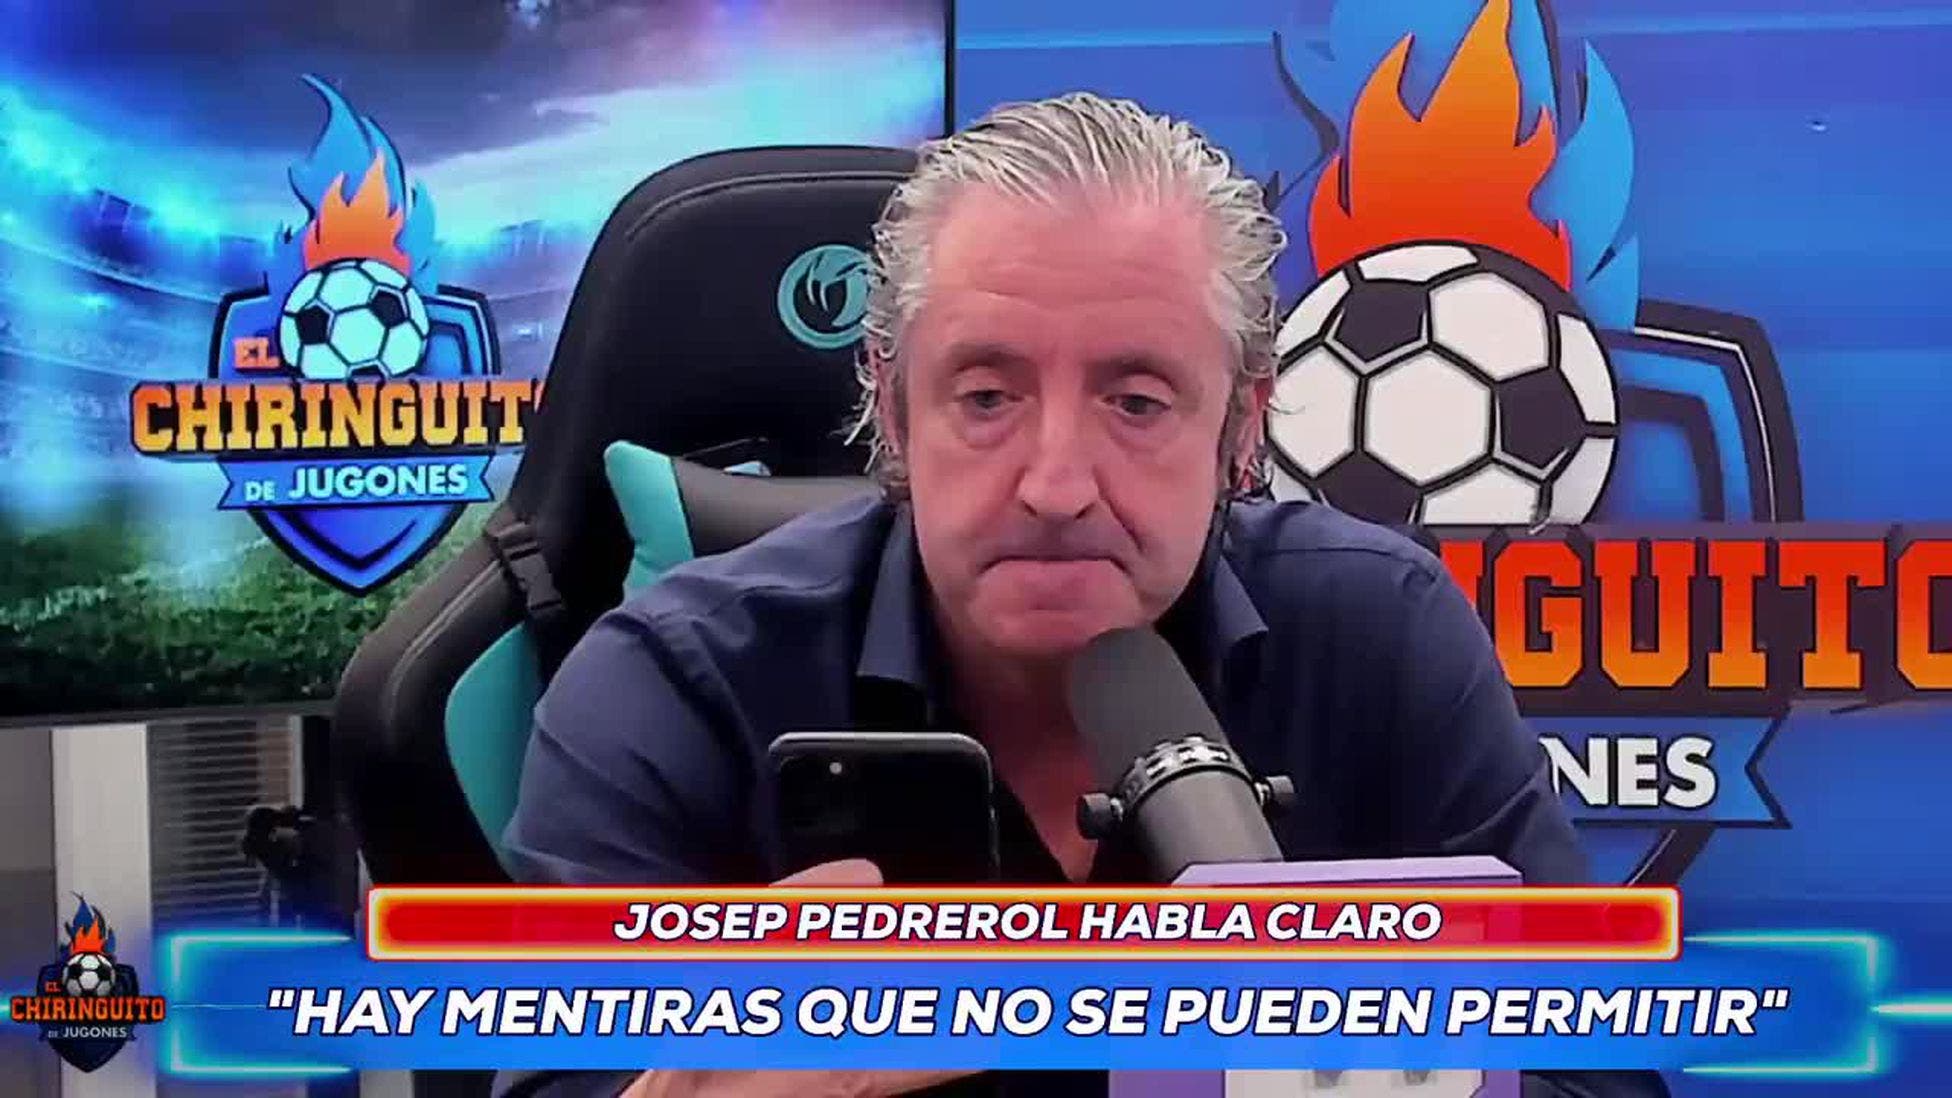 Sharp response from Iñaki Angulo to the threats from Pedrerol and El Chiringuito
